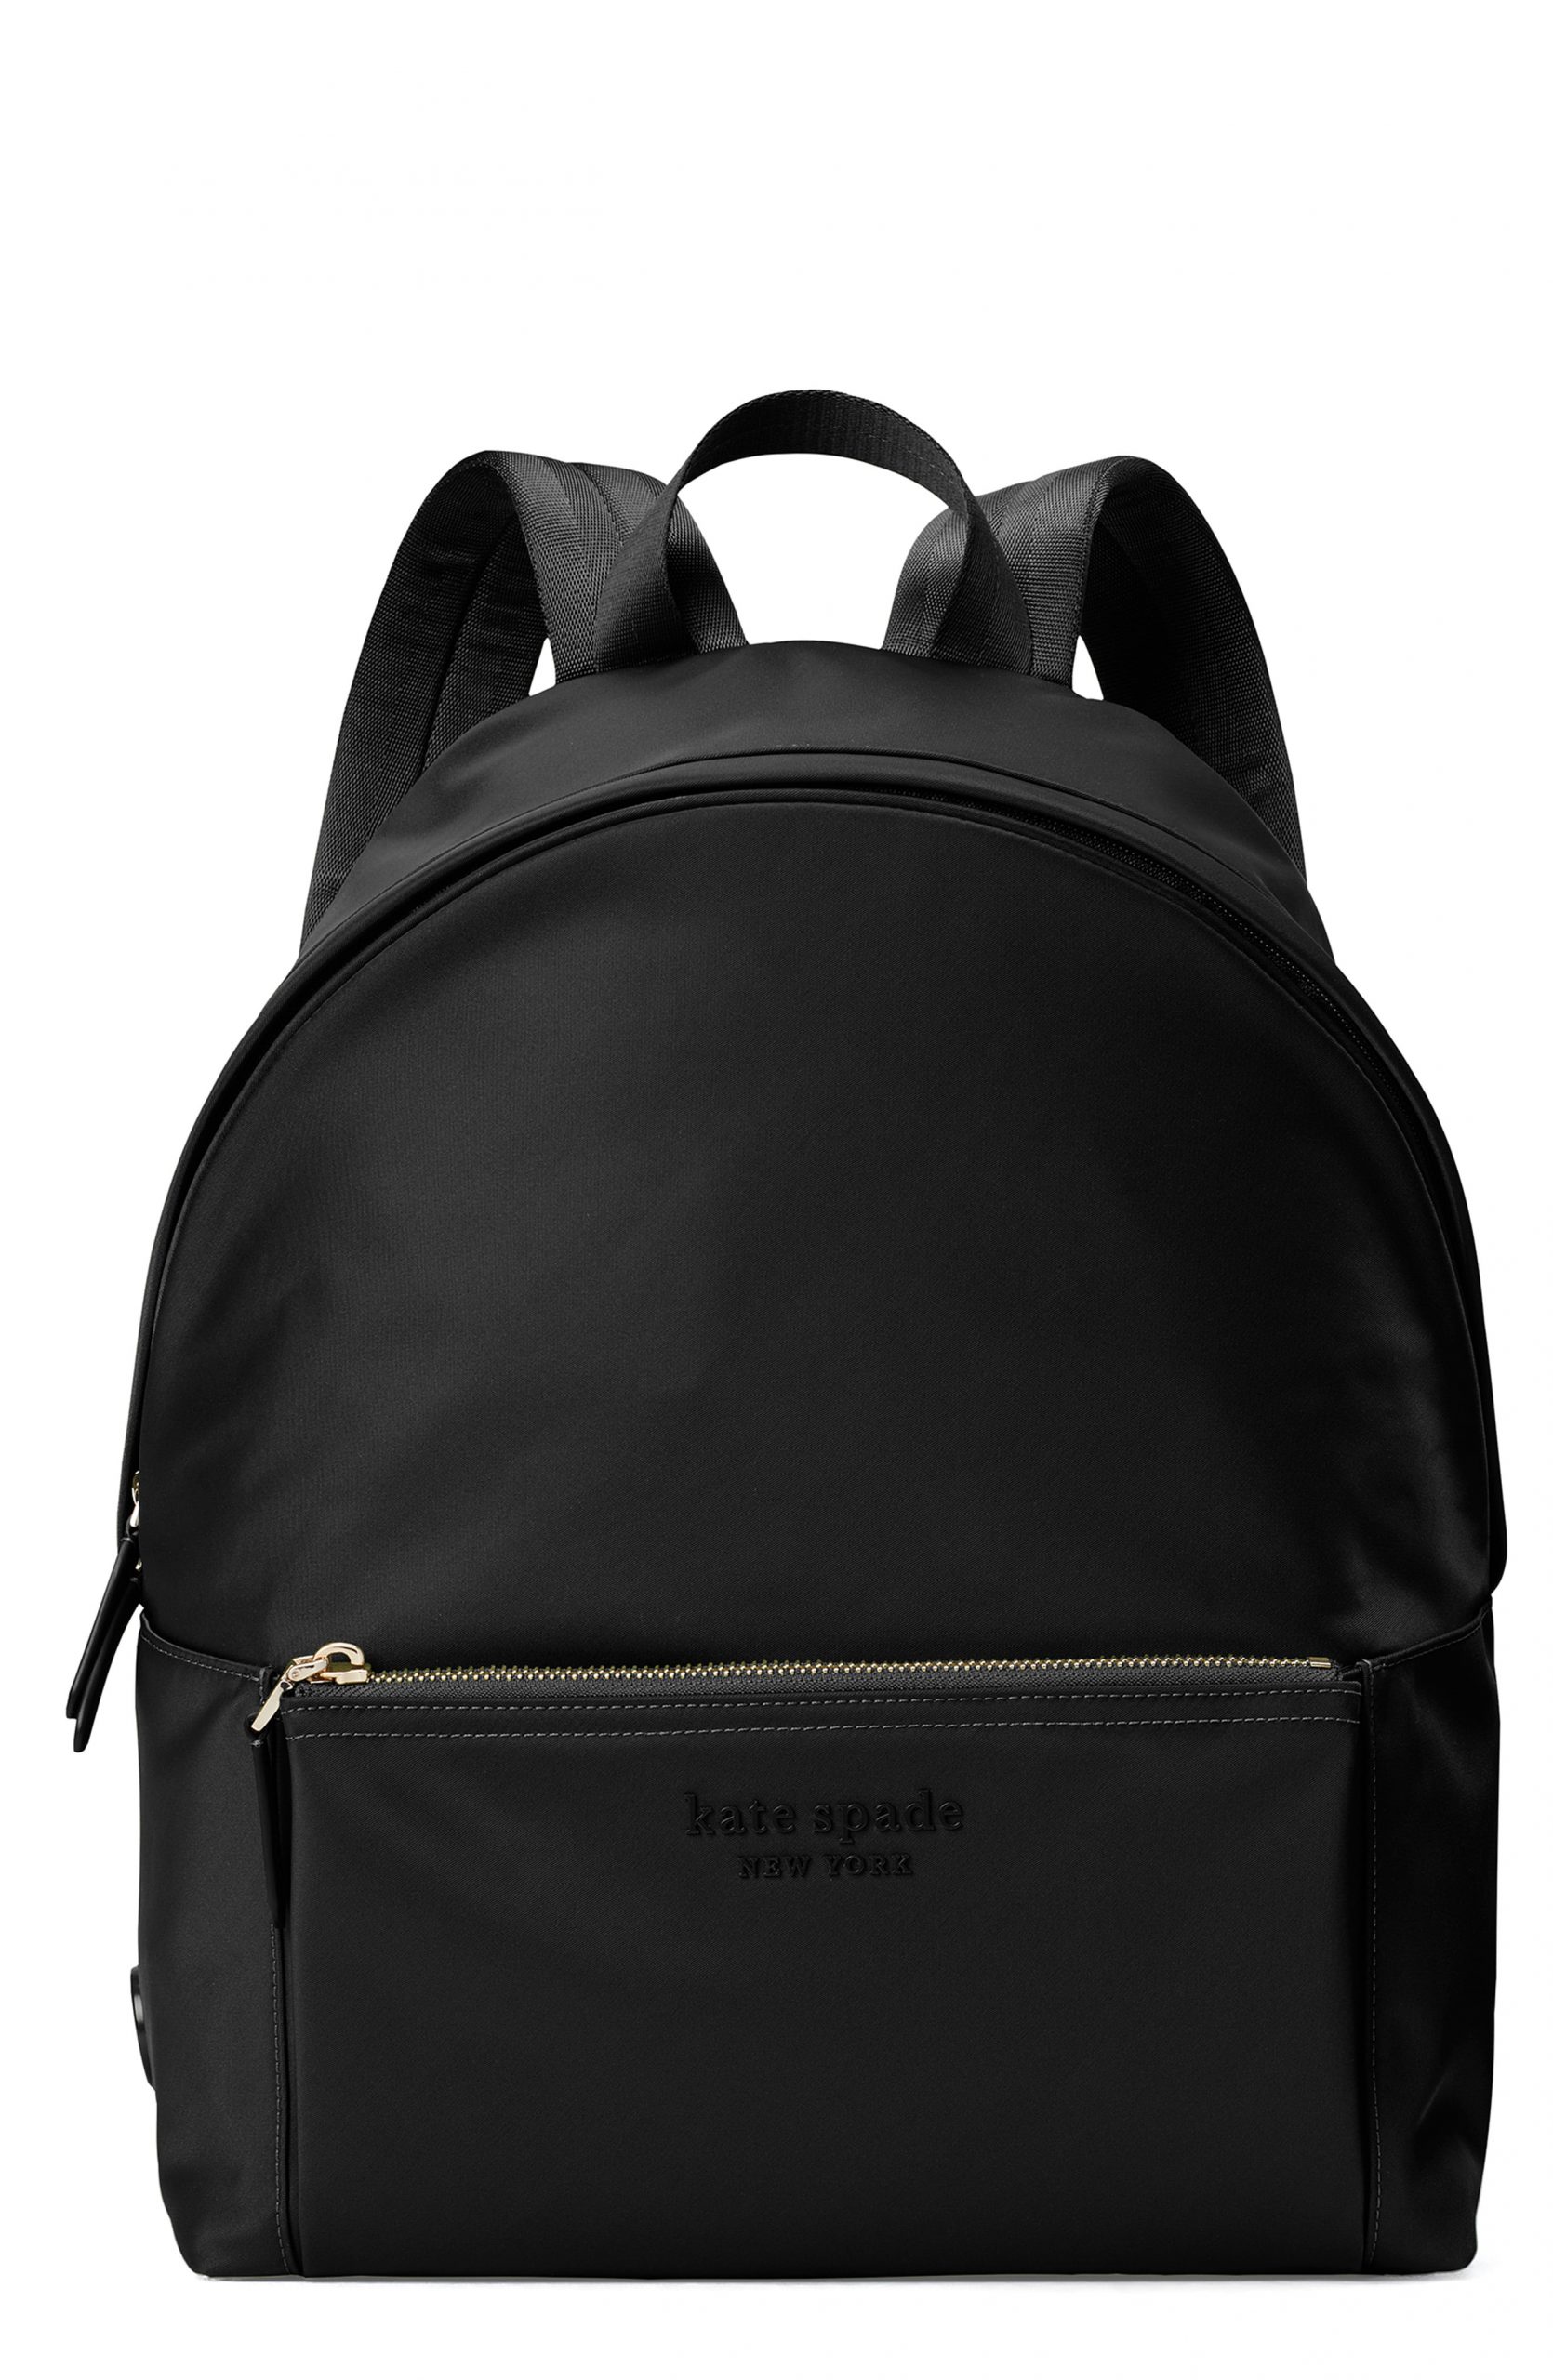 Kate Spade New York Large City Nylon Backpack - Black | Fashion Gone Rogue